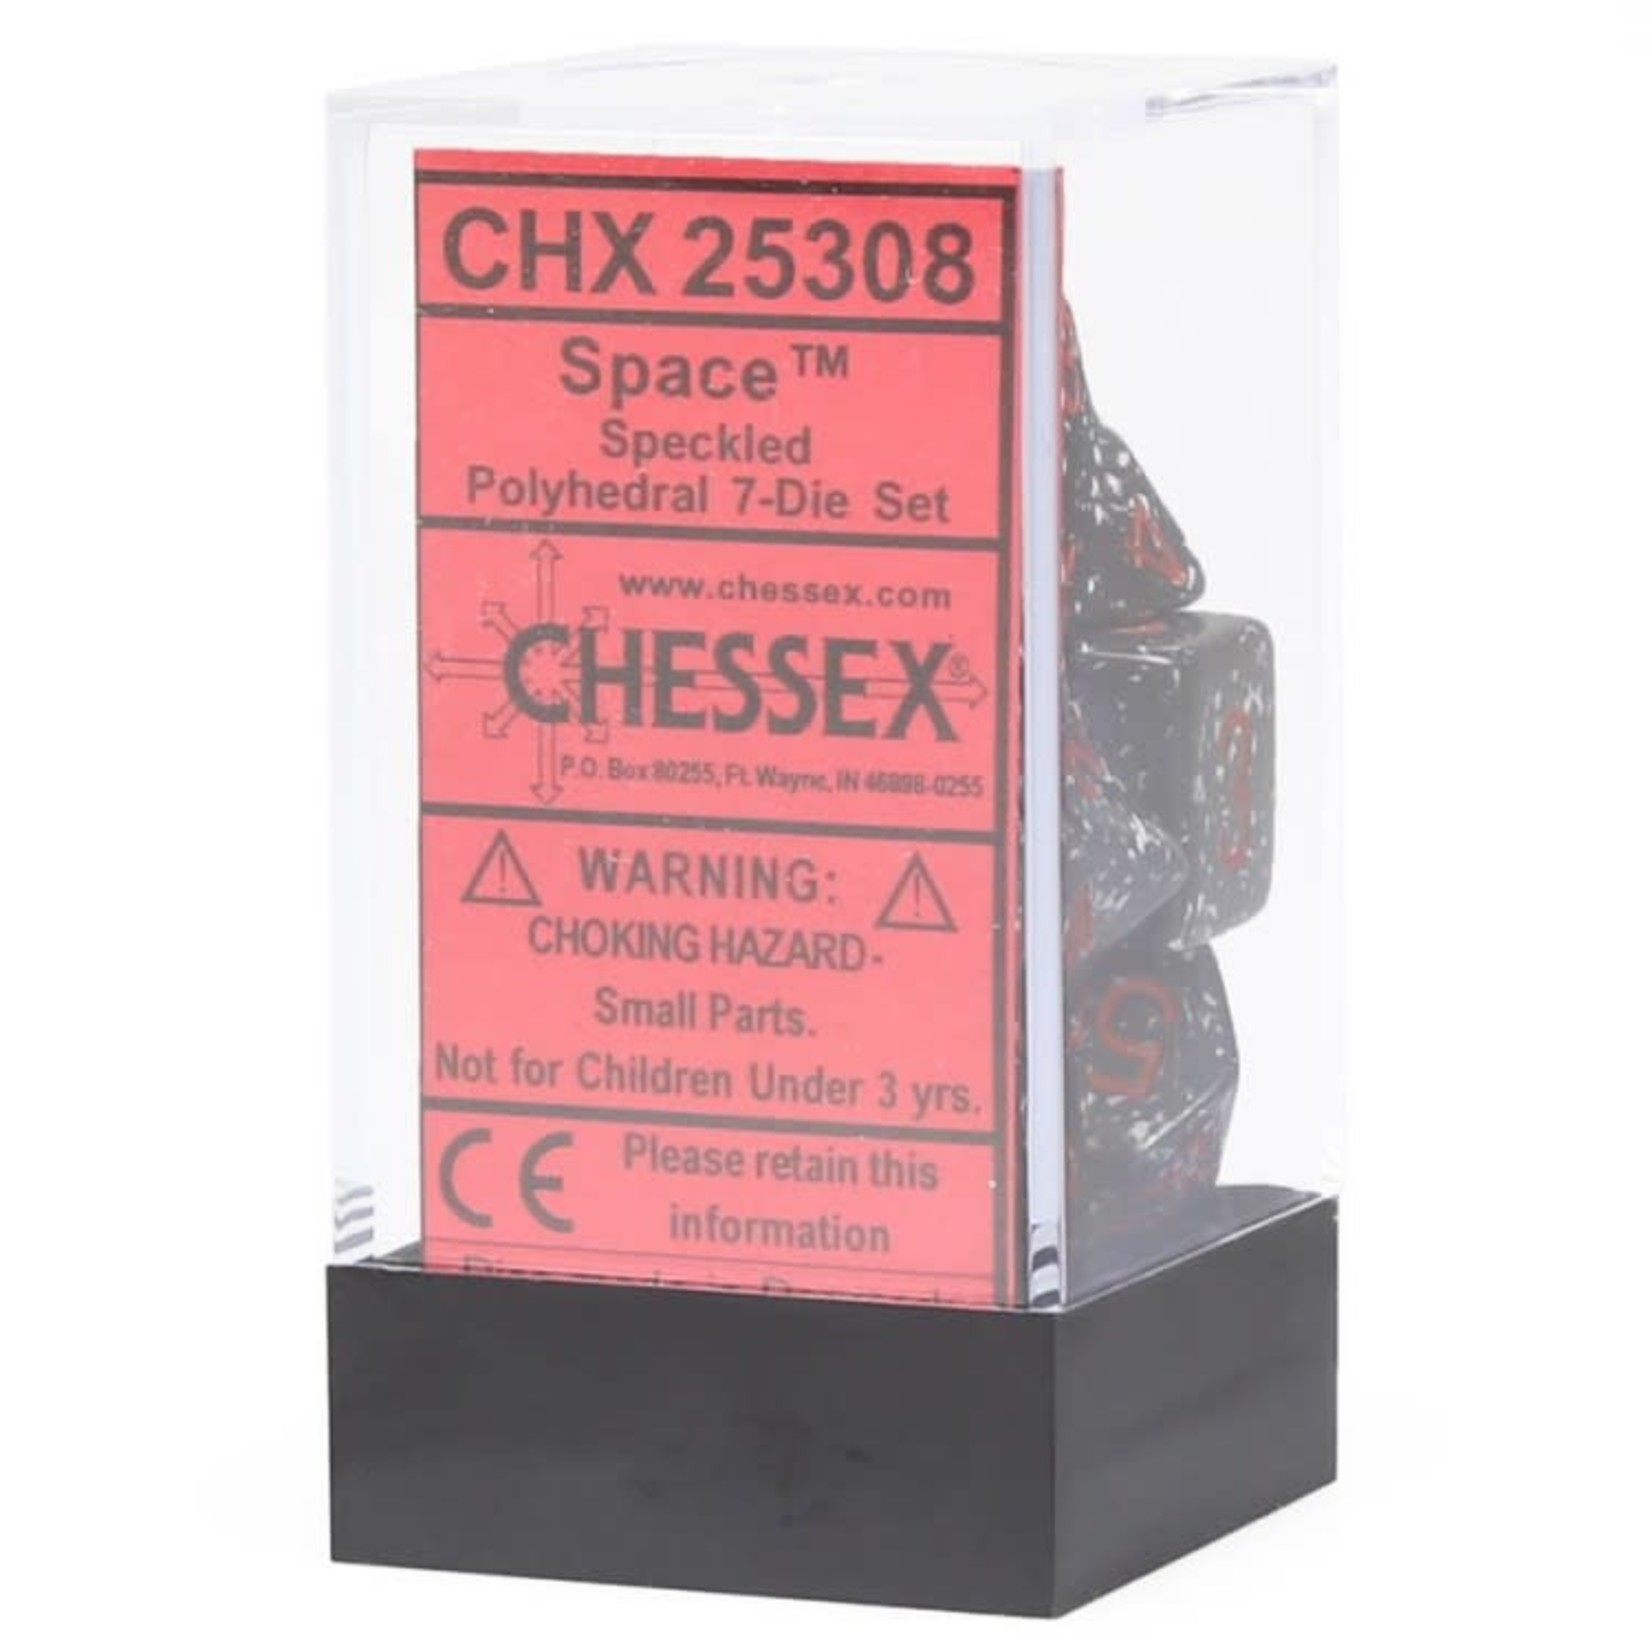 Chessex Chessex Speckled Space Polyhedral 7 die set